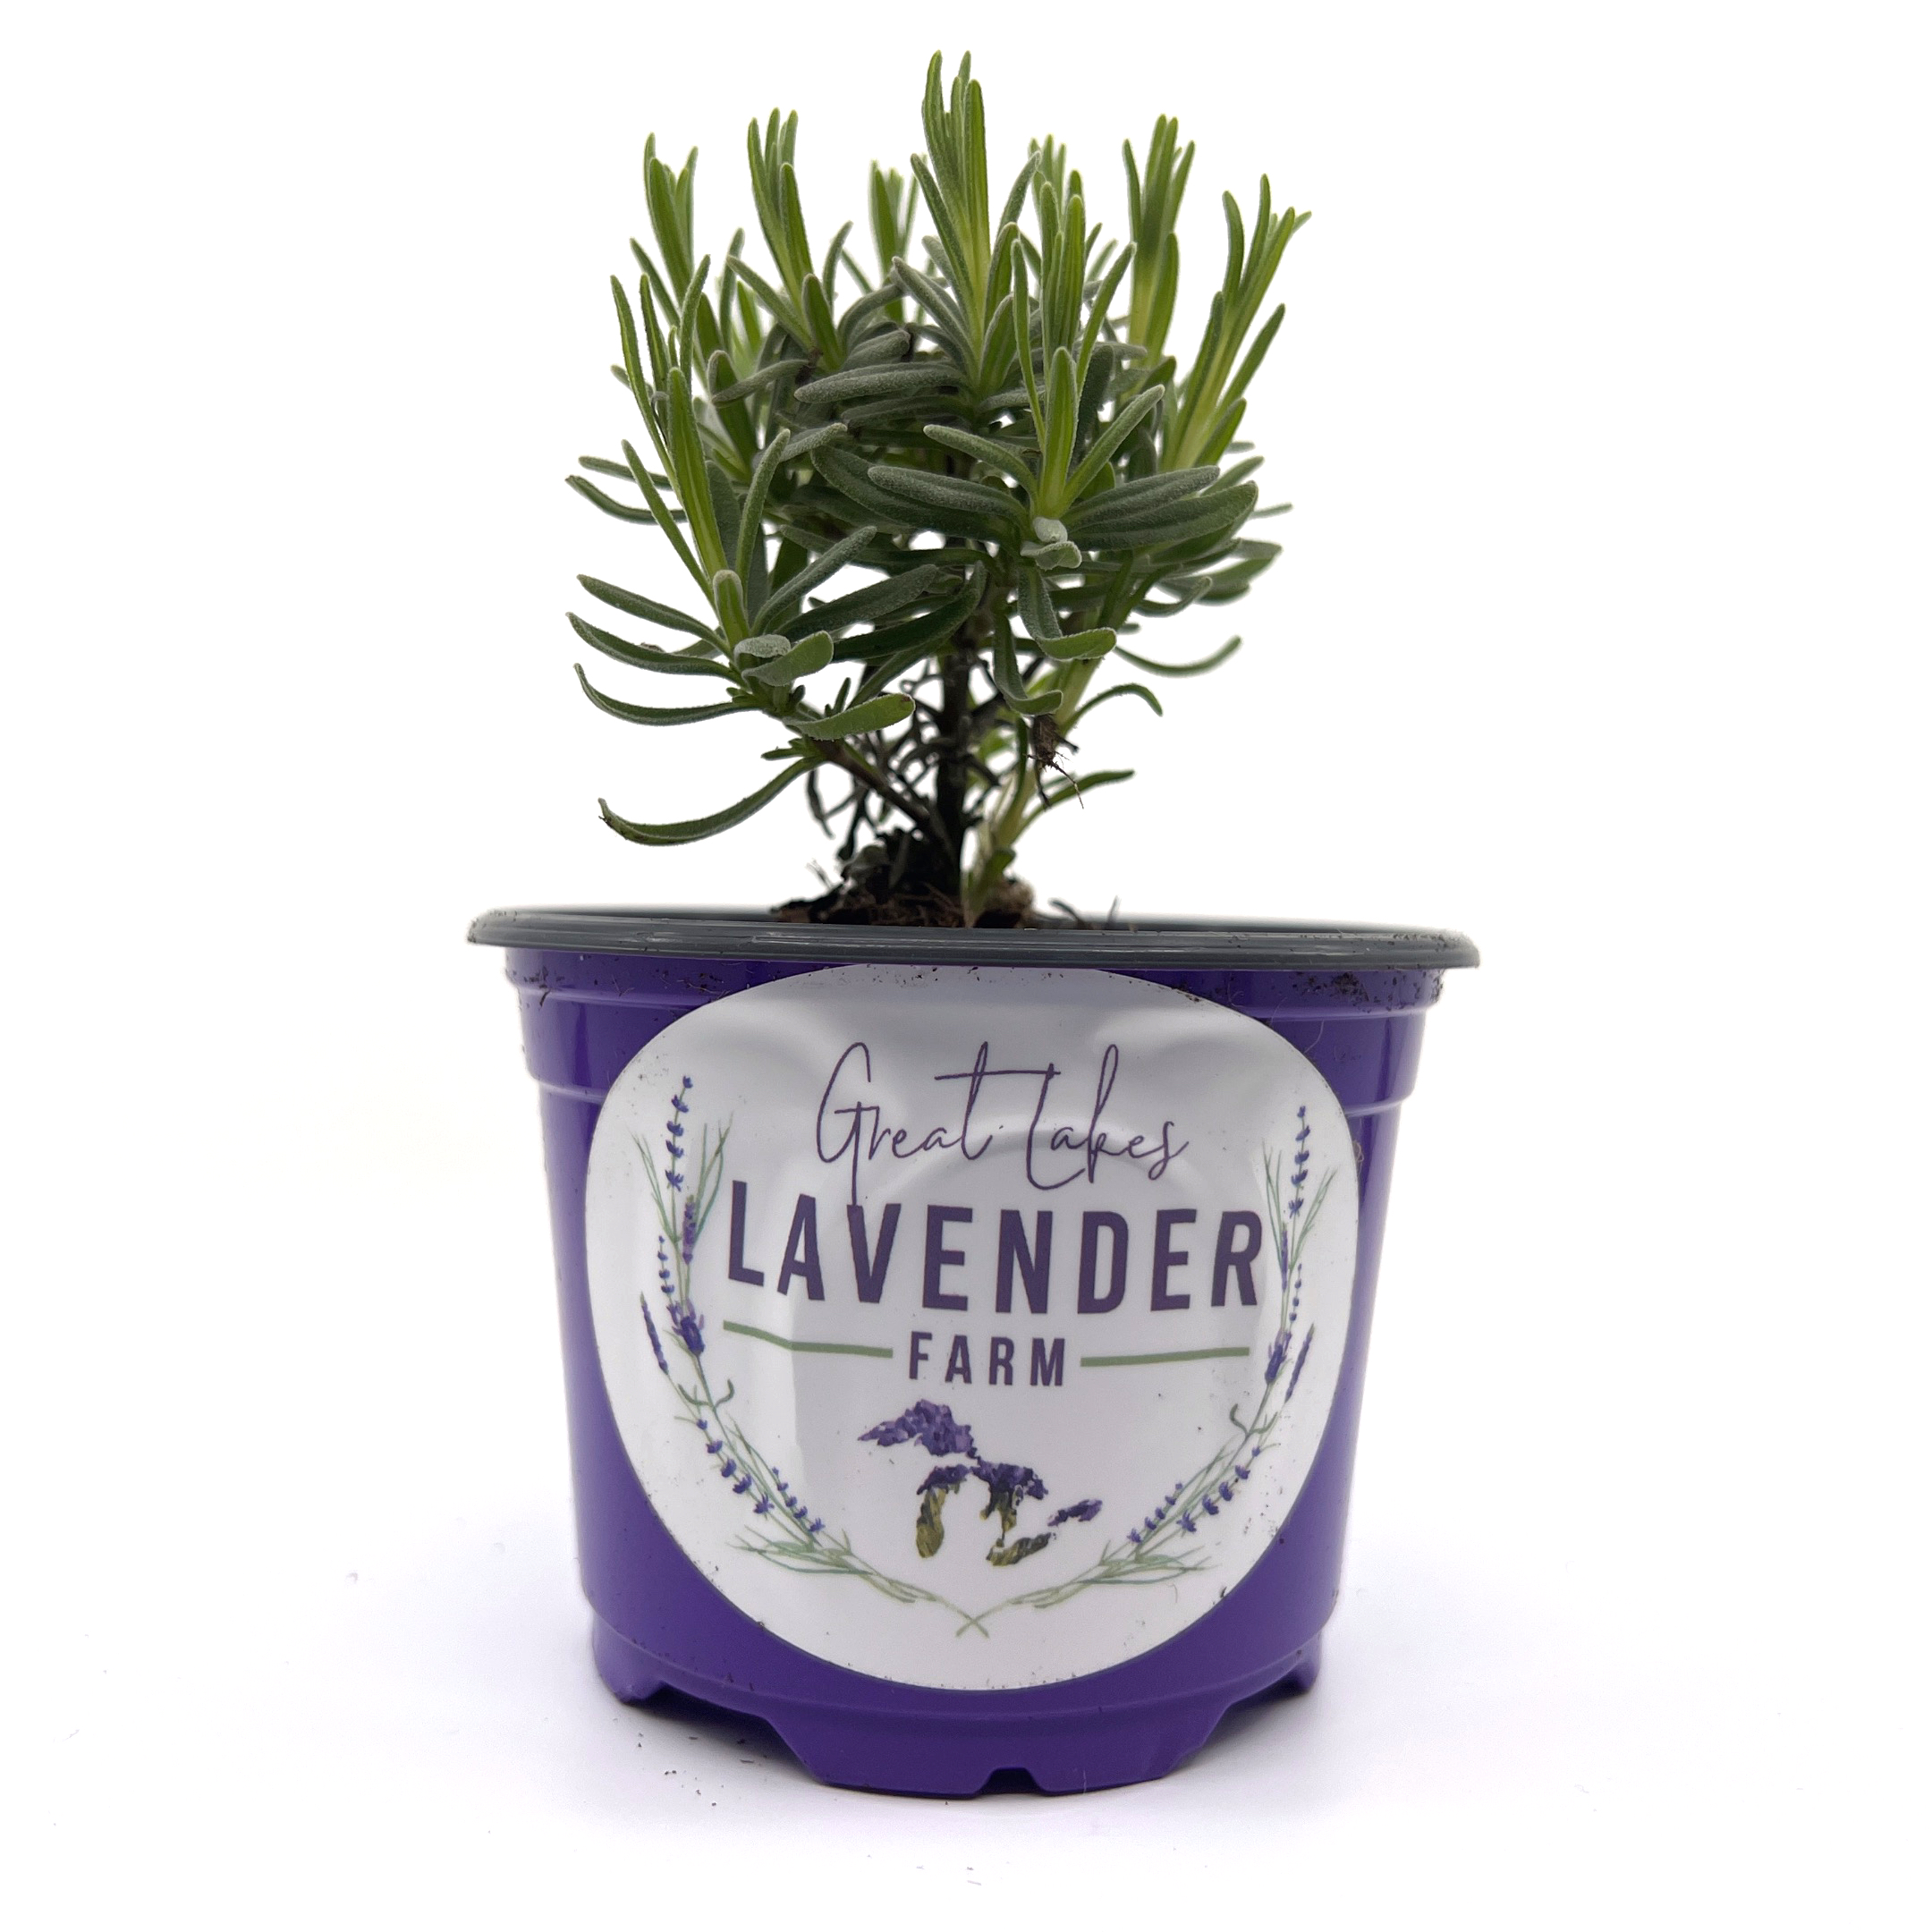 2 Live French Lavender Plants Flower Purple Lavender Plant, 4 Inch Pot for  Planting, Ready to Plant